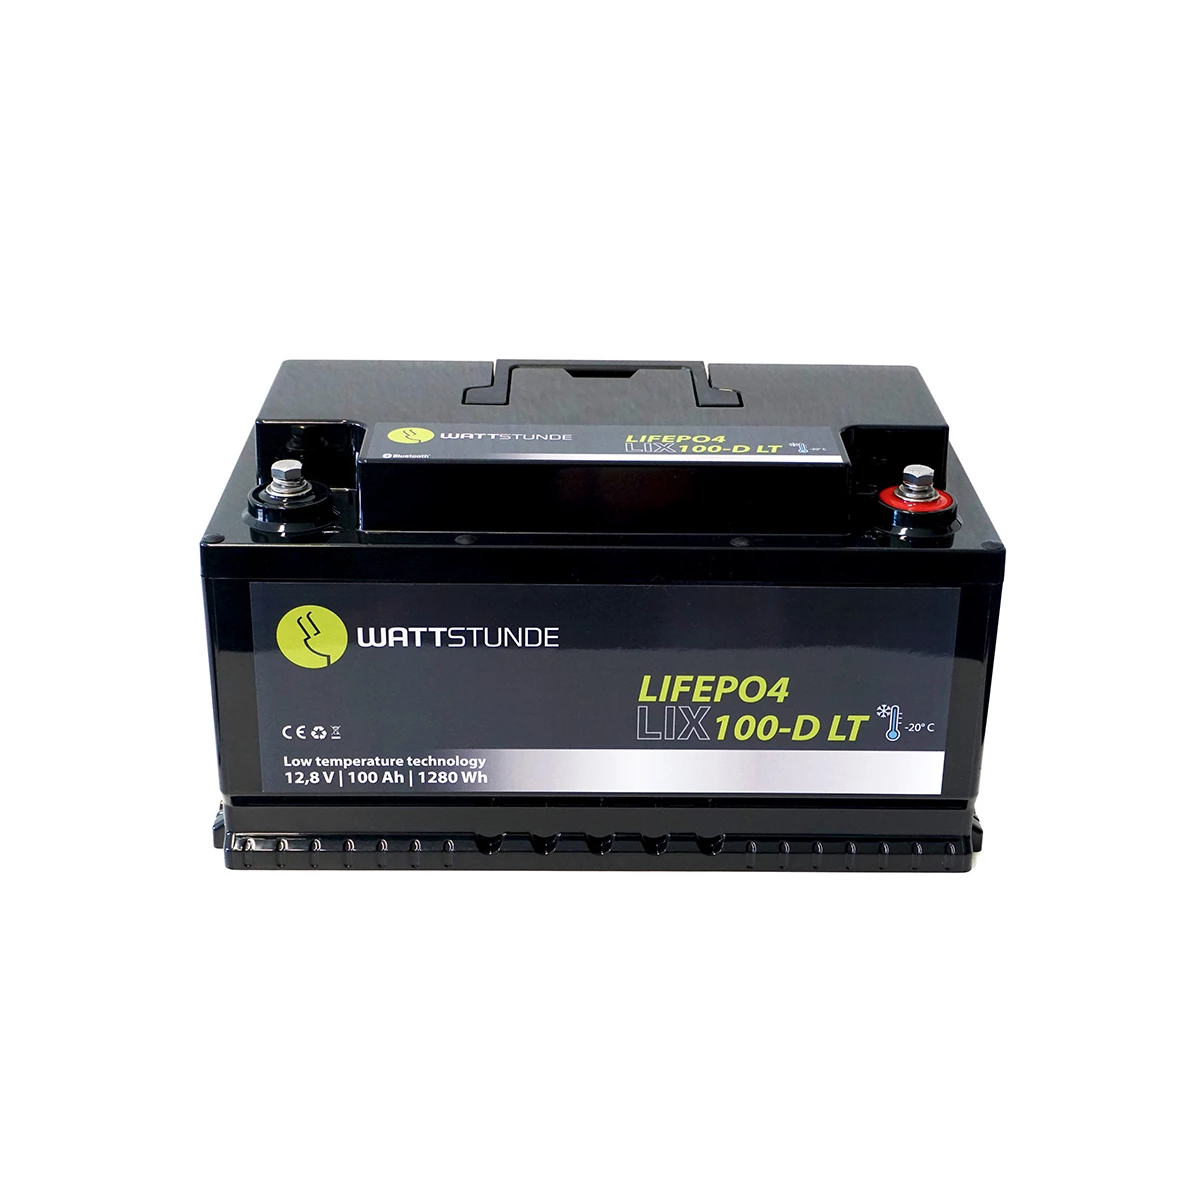 Wattstunde Lithium 100ah LifePO4 - Off Grid Power Station